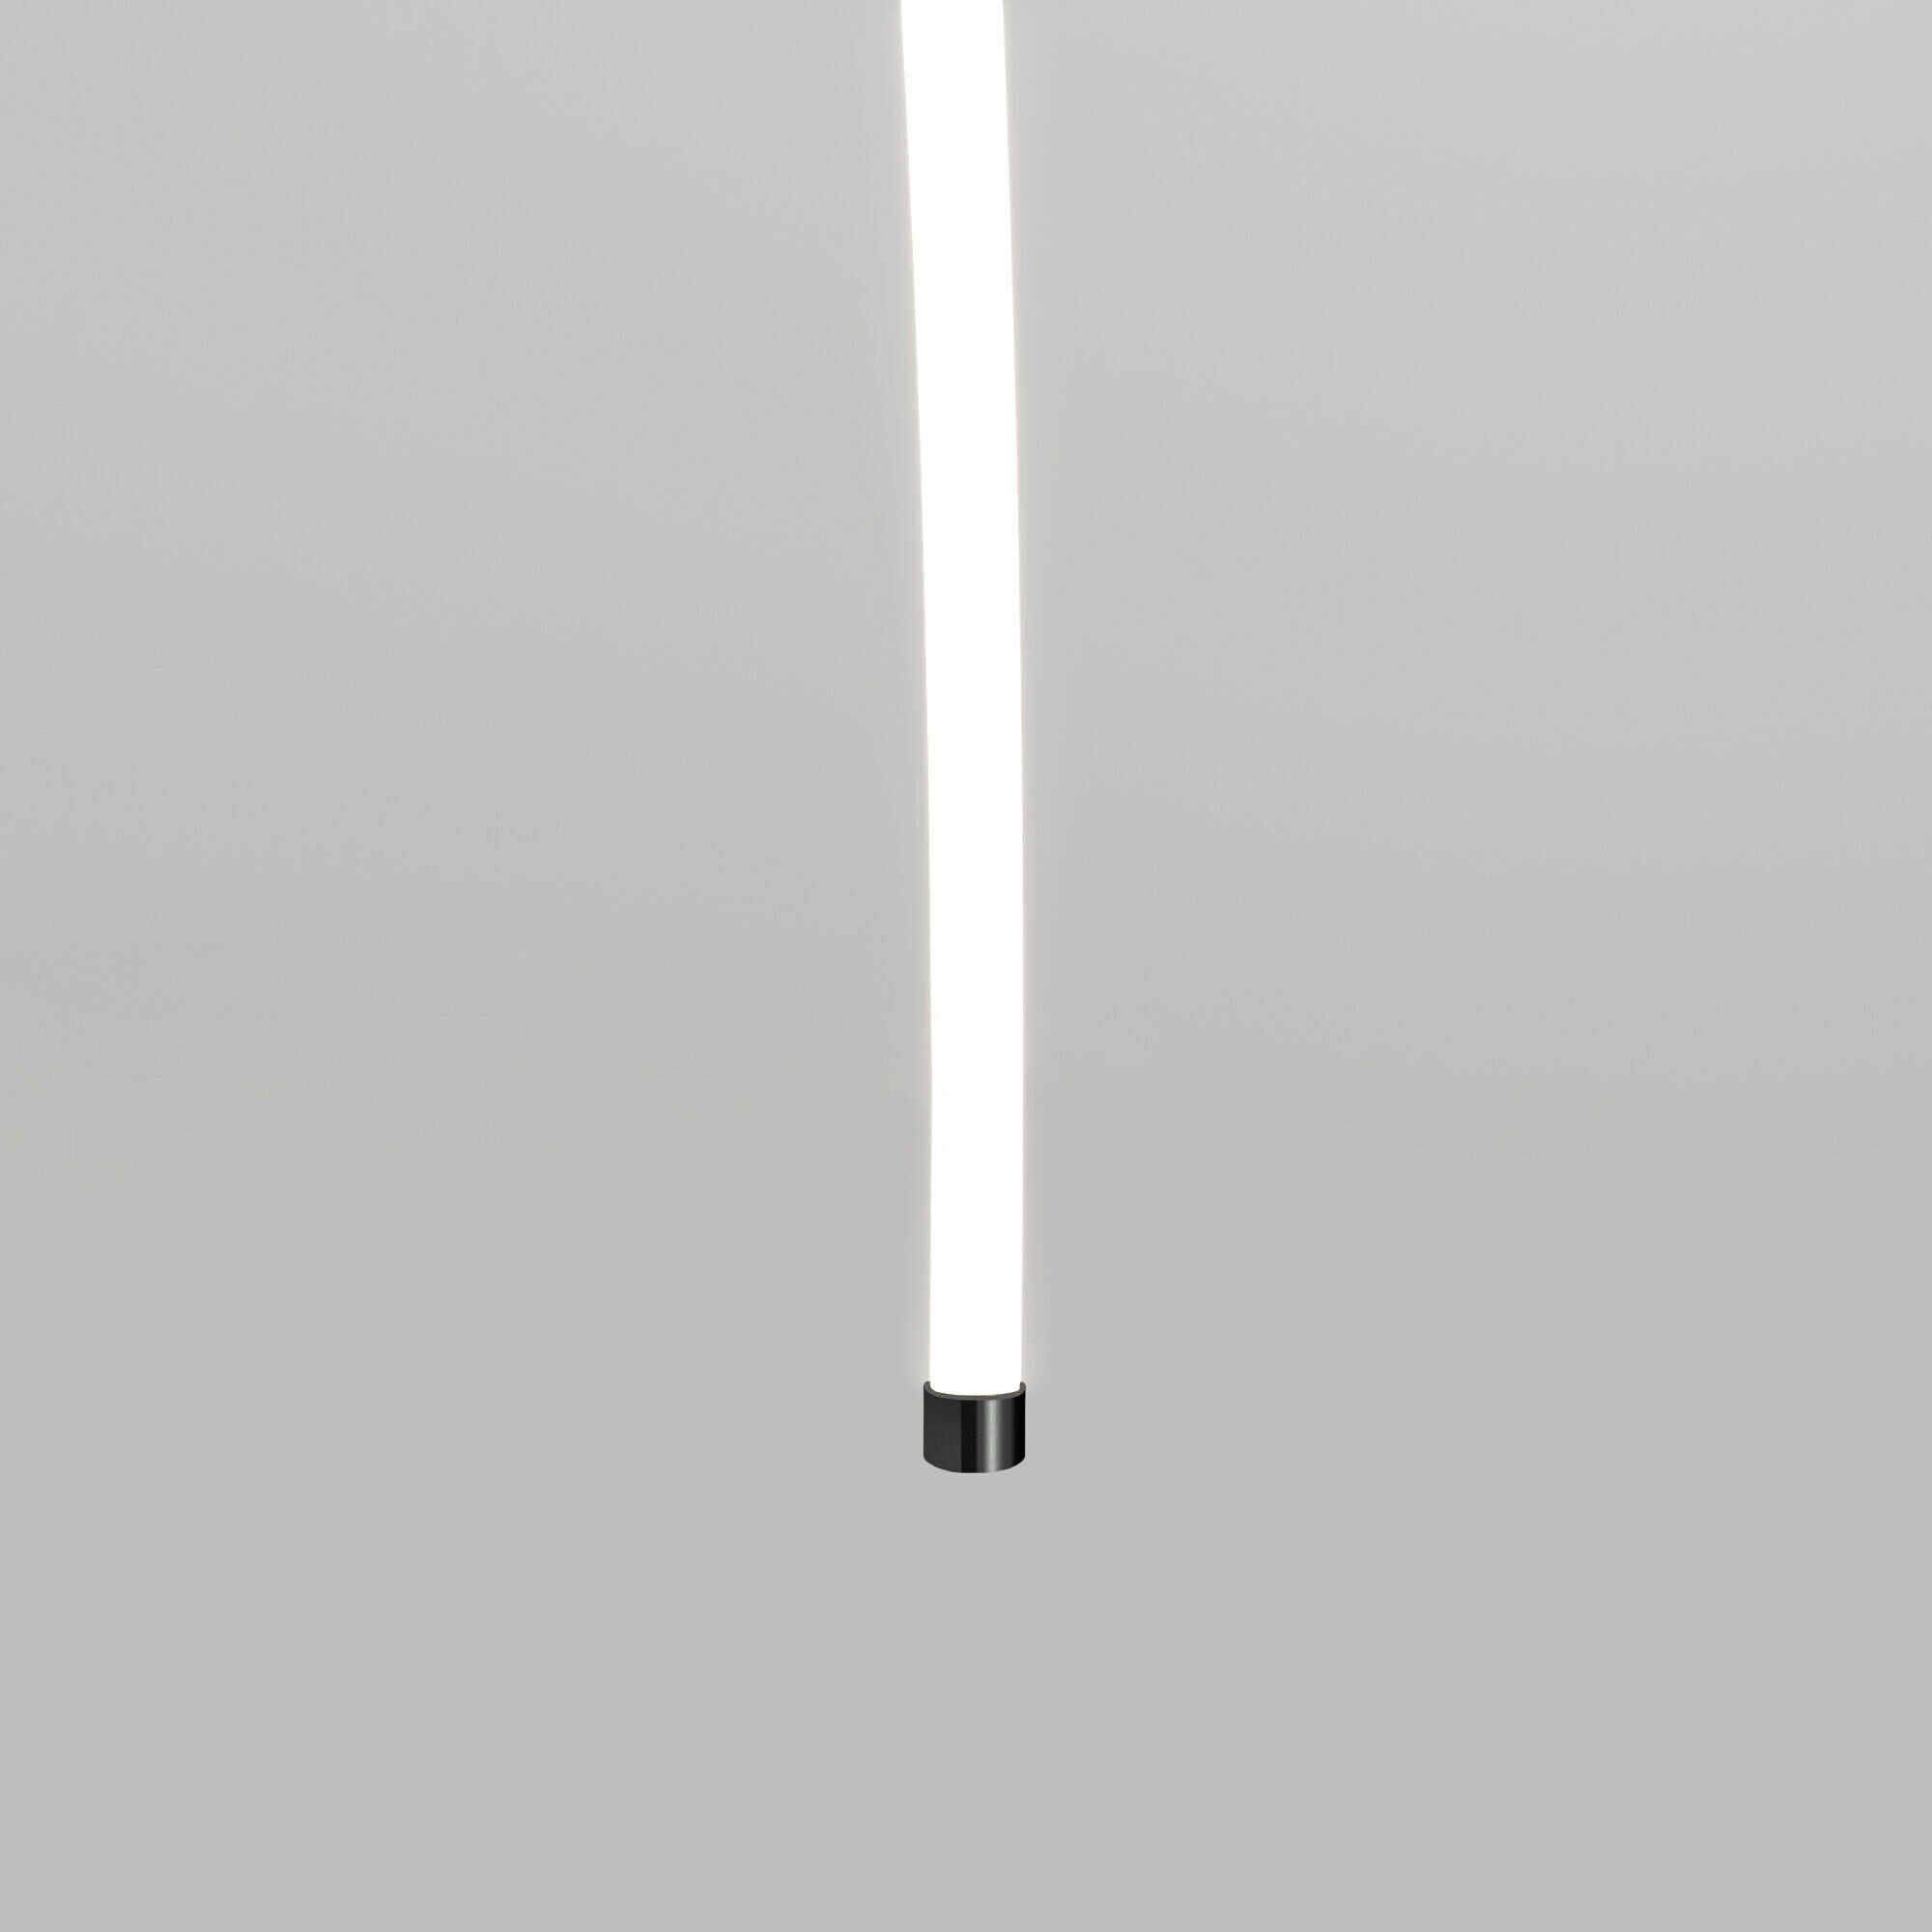 Заглушка для круглого гибкого неона Elektrostandard Full light FL 28/20, цвет черный